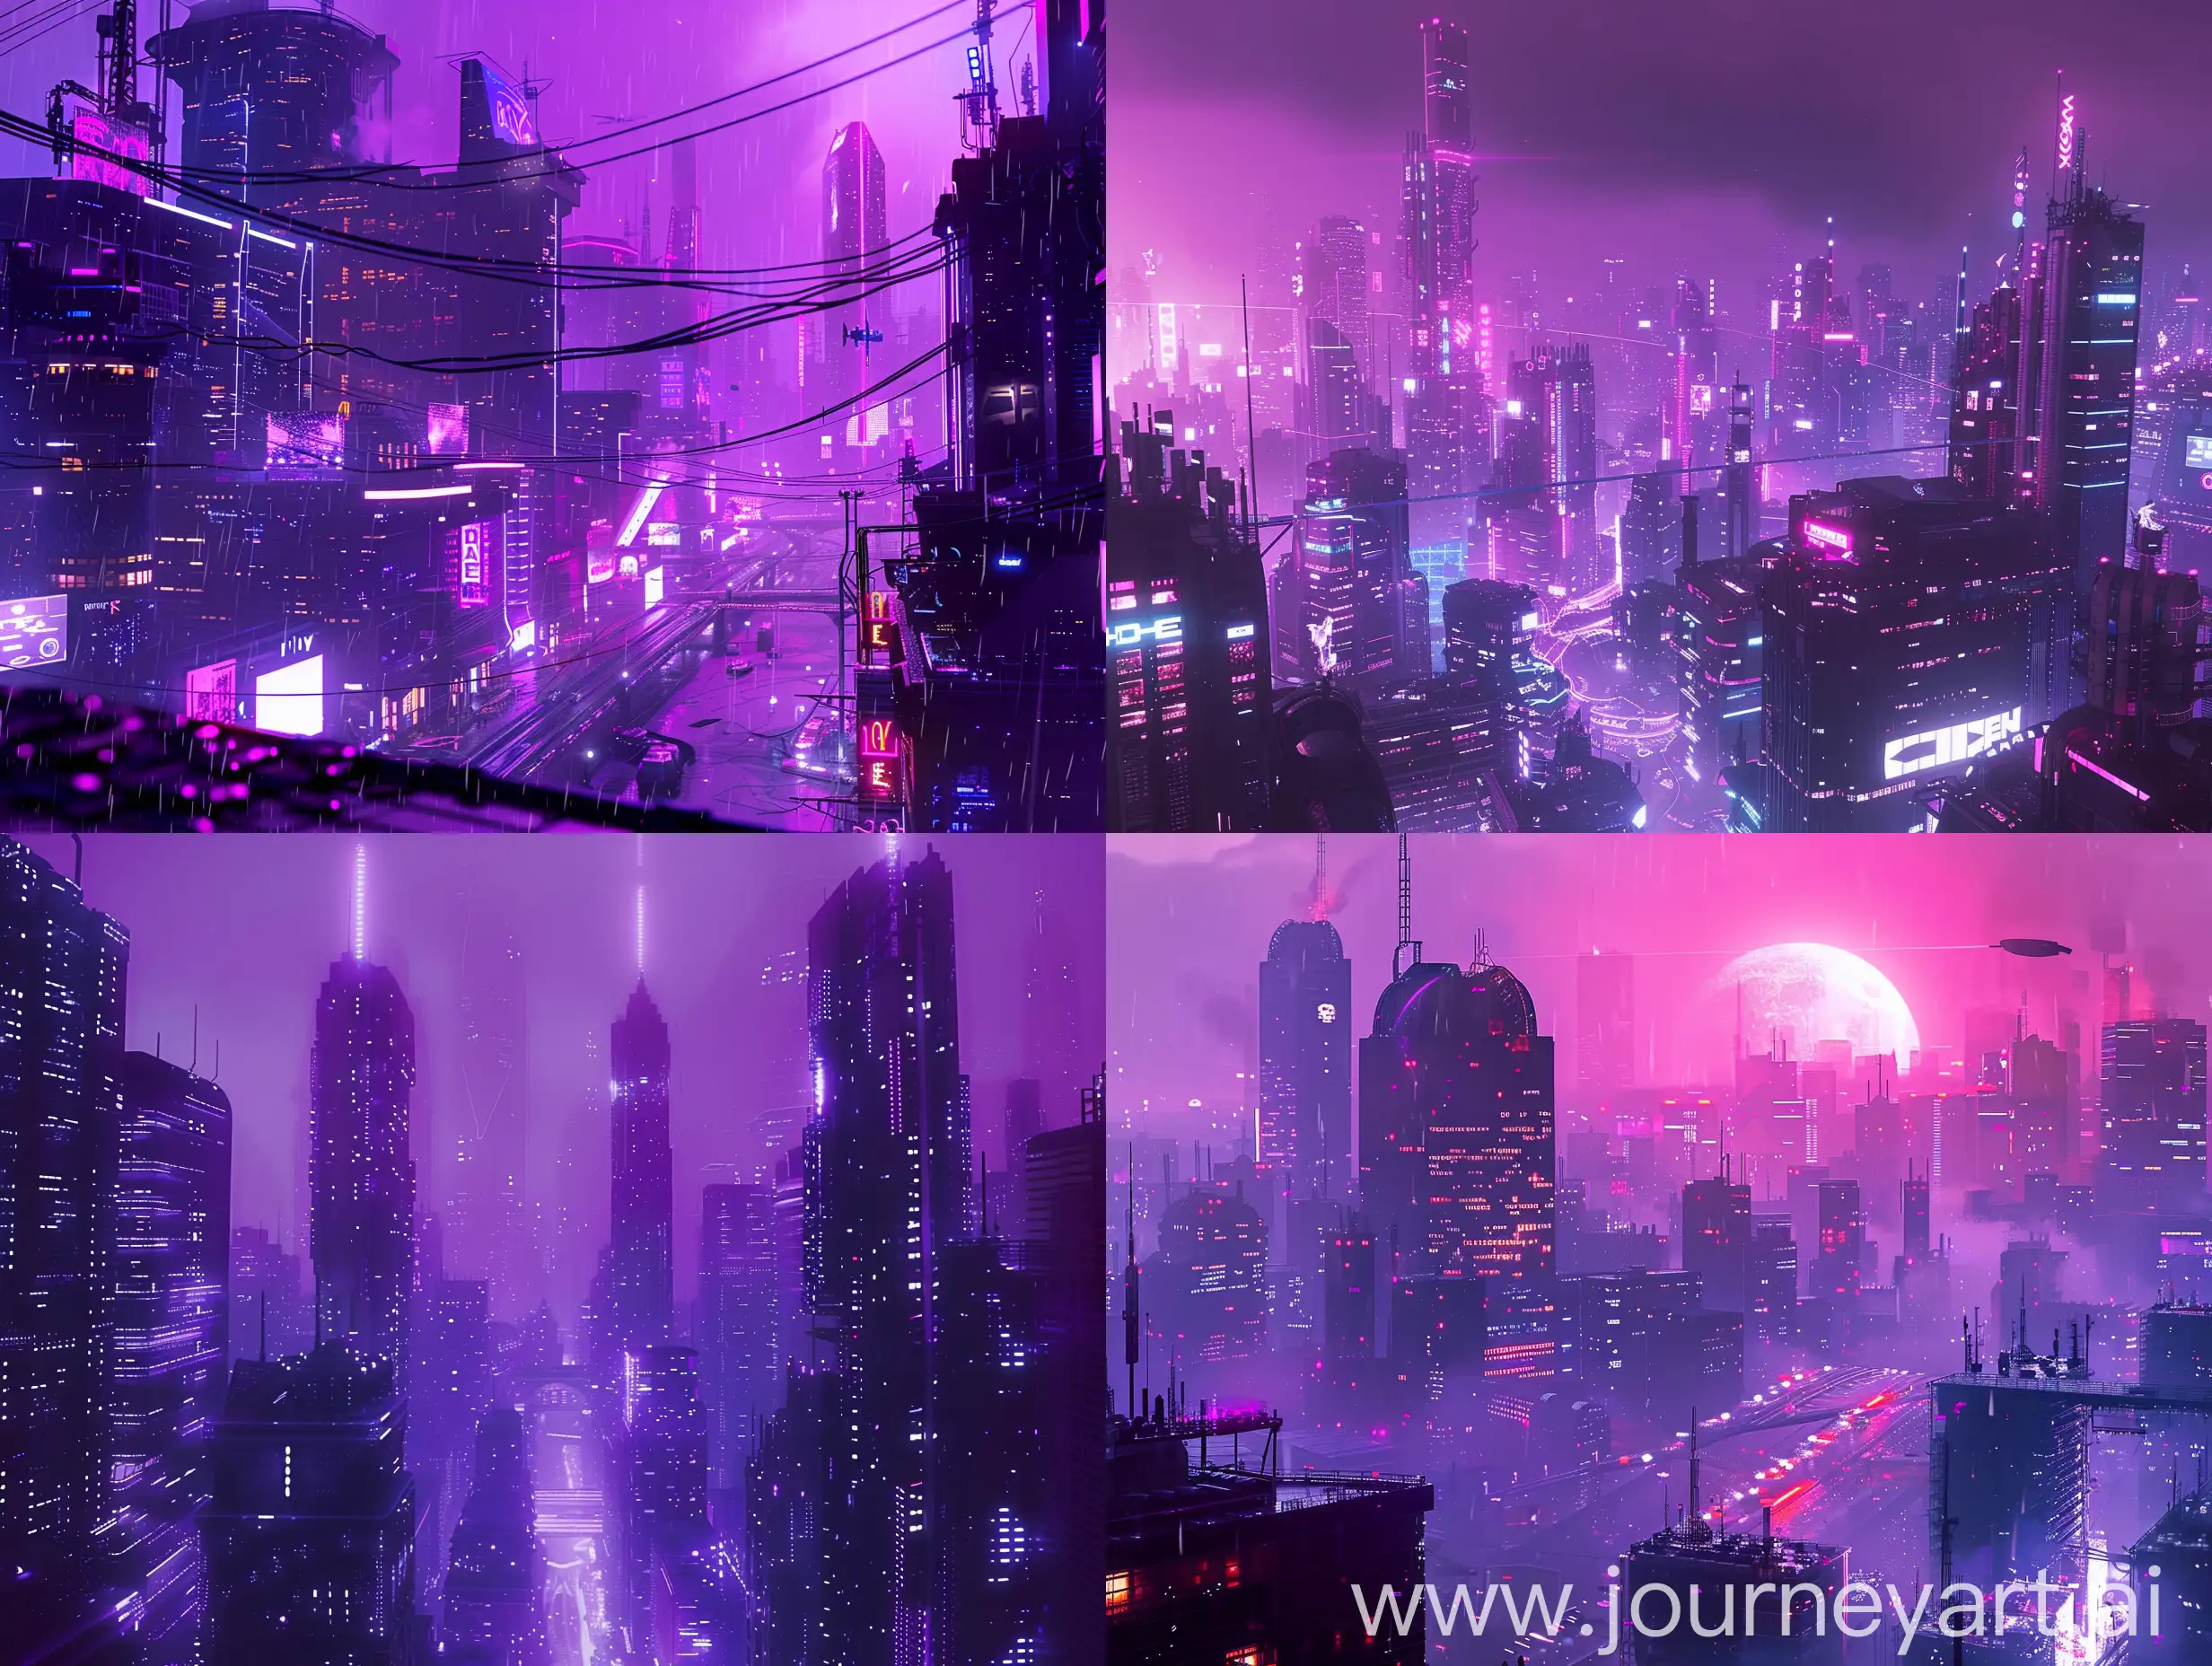 A CYBERPUNK CITY, purple, synthwave

